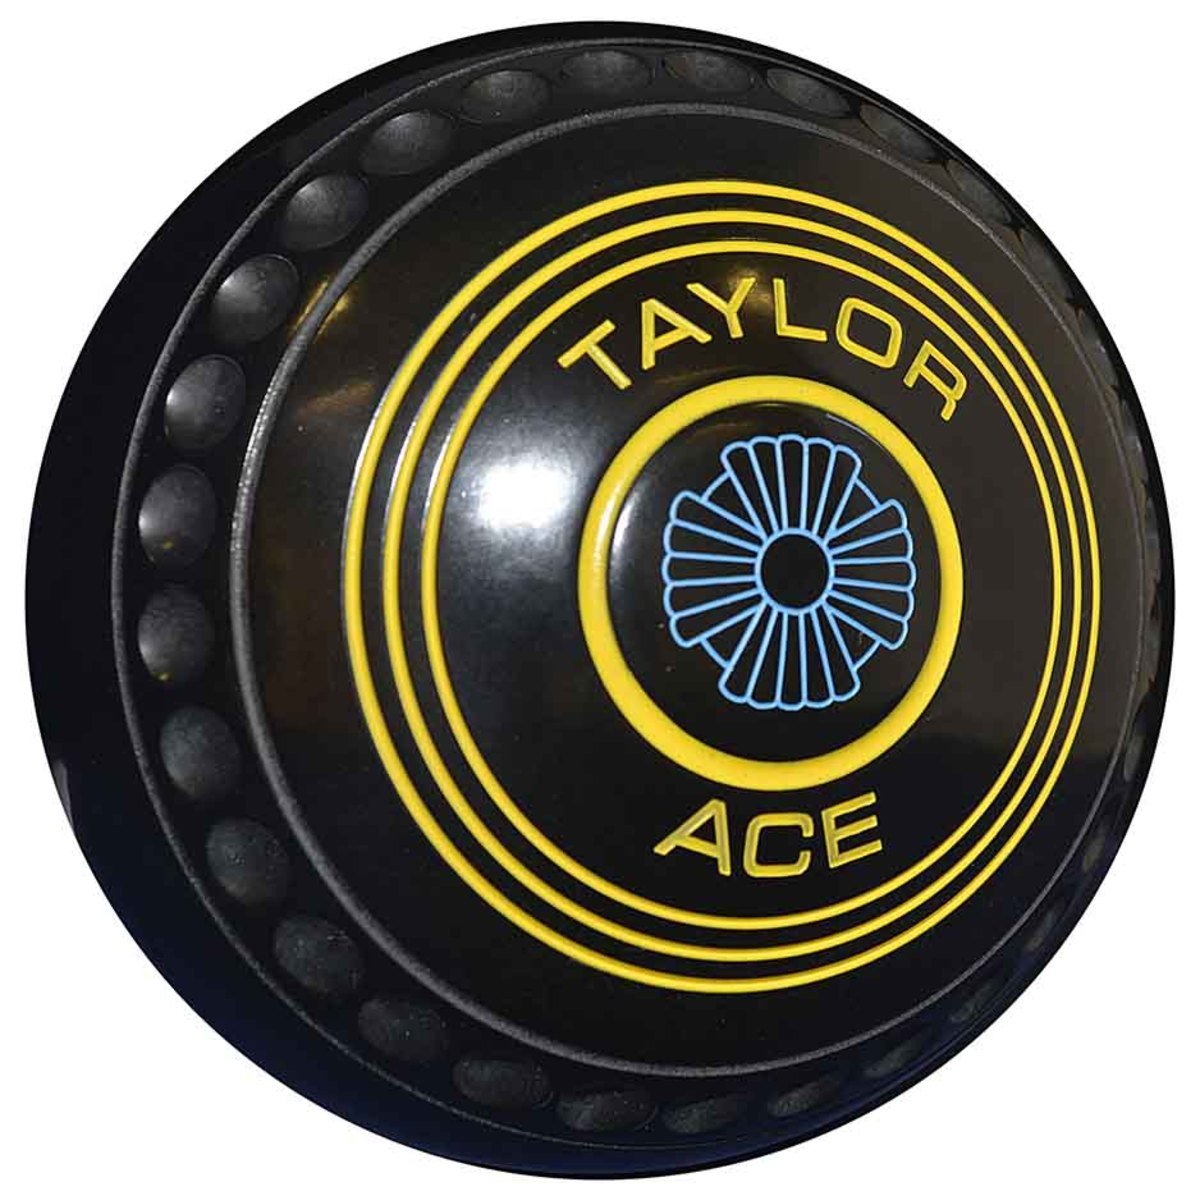 Taylors Ace Bowls - Black